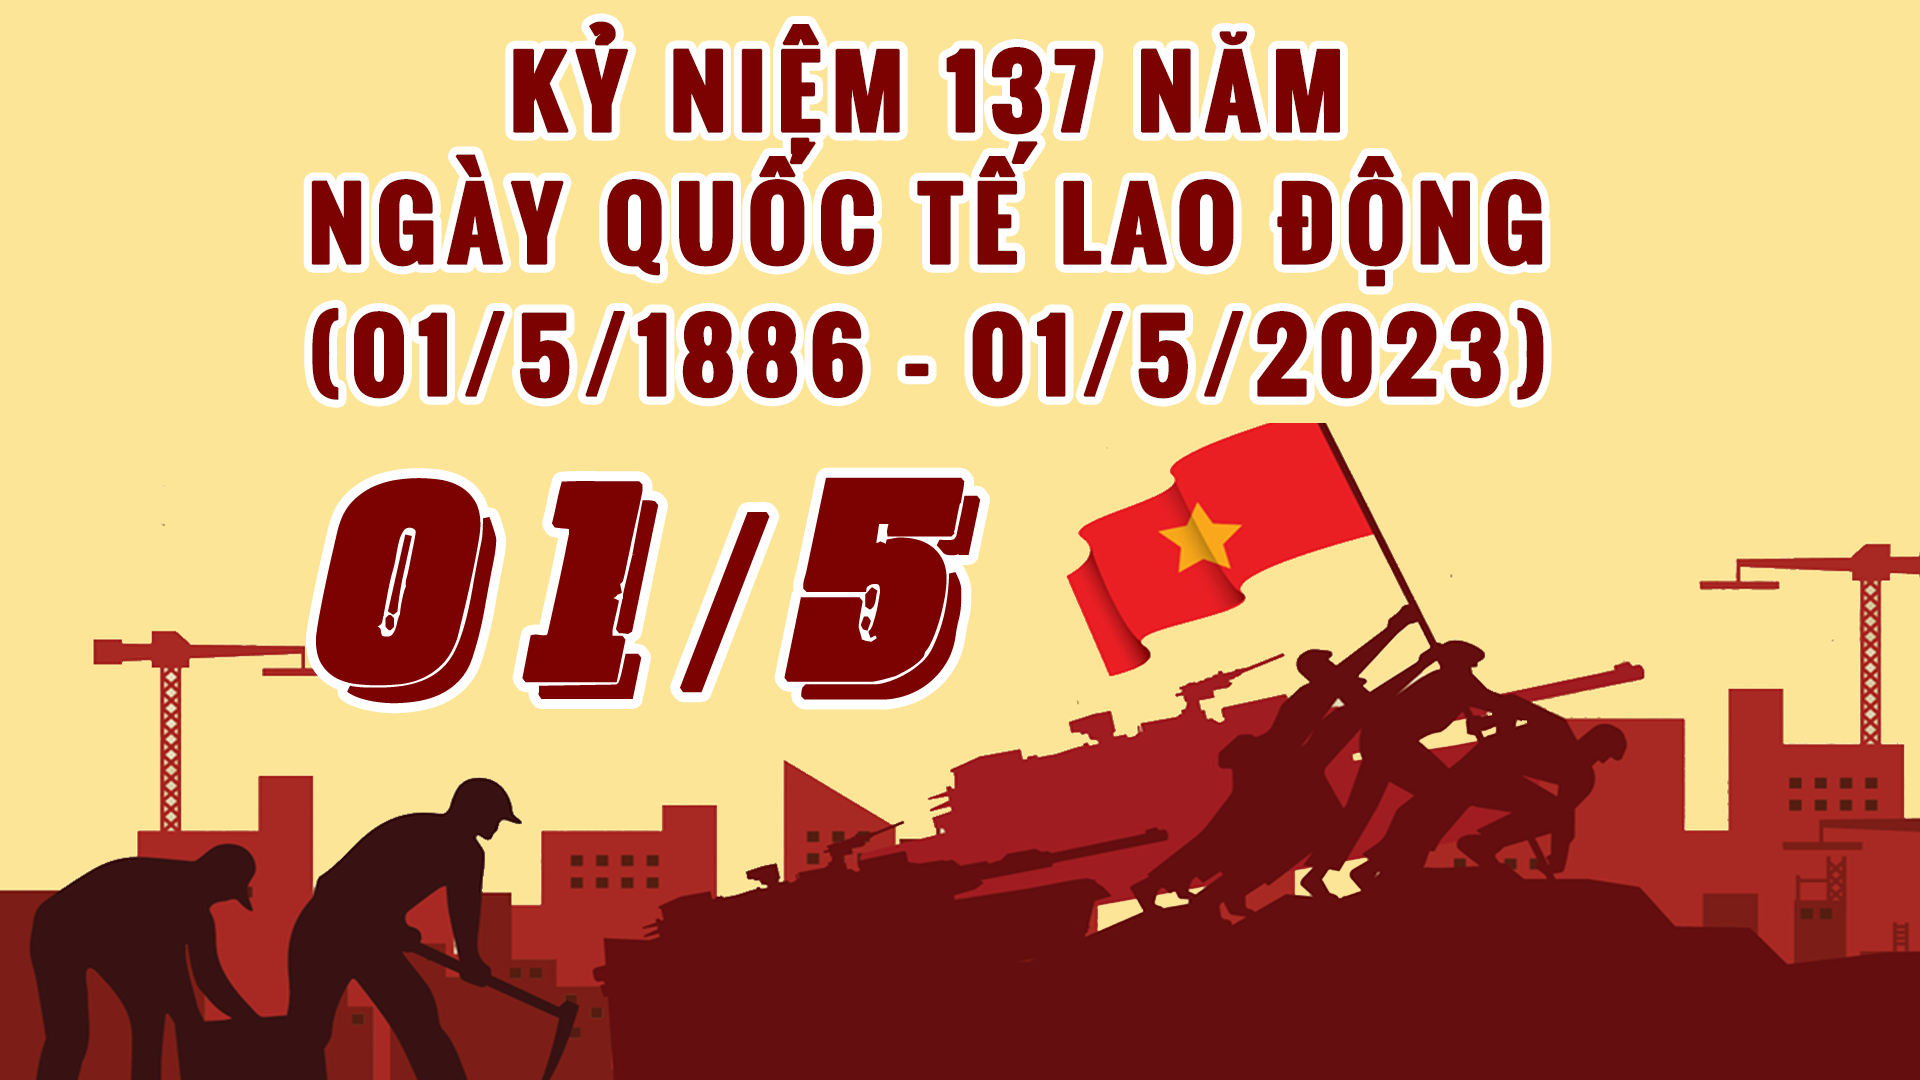 137 nam Quoc te Lao dong